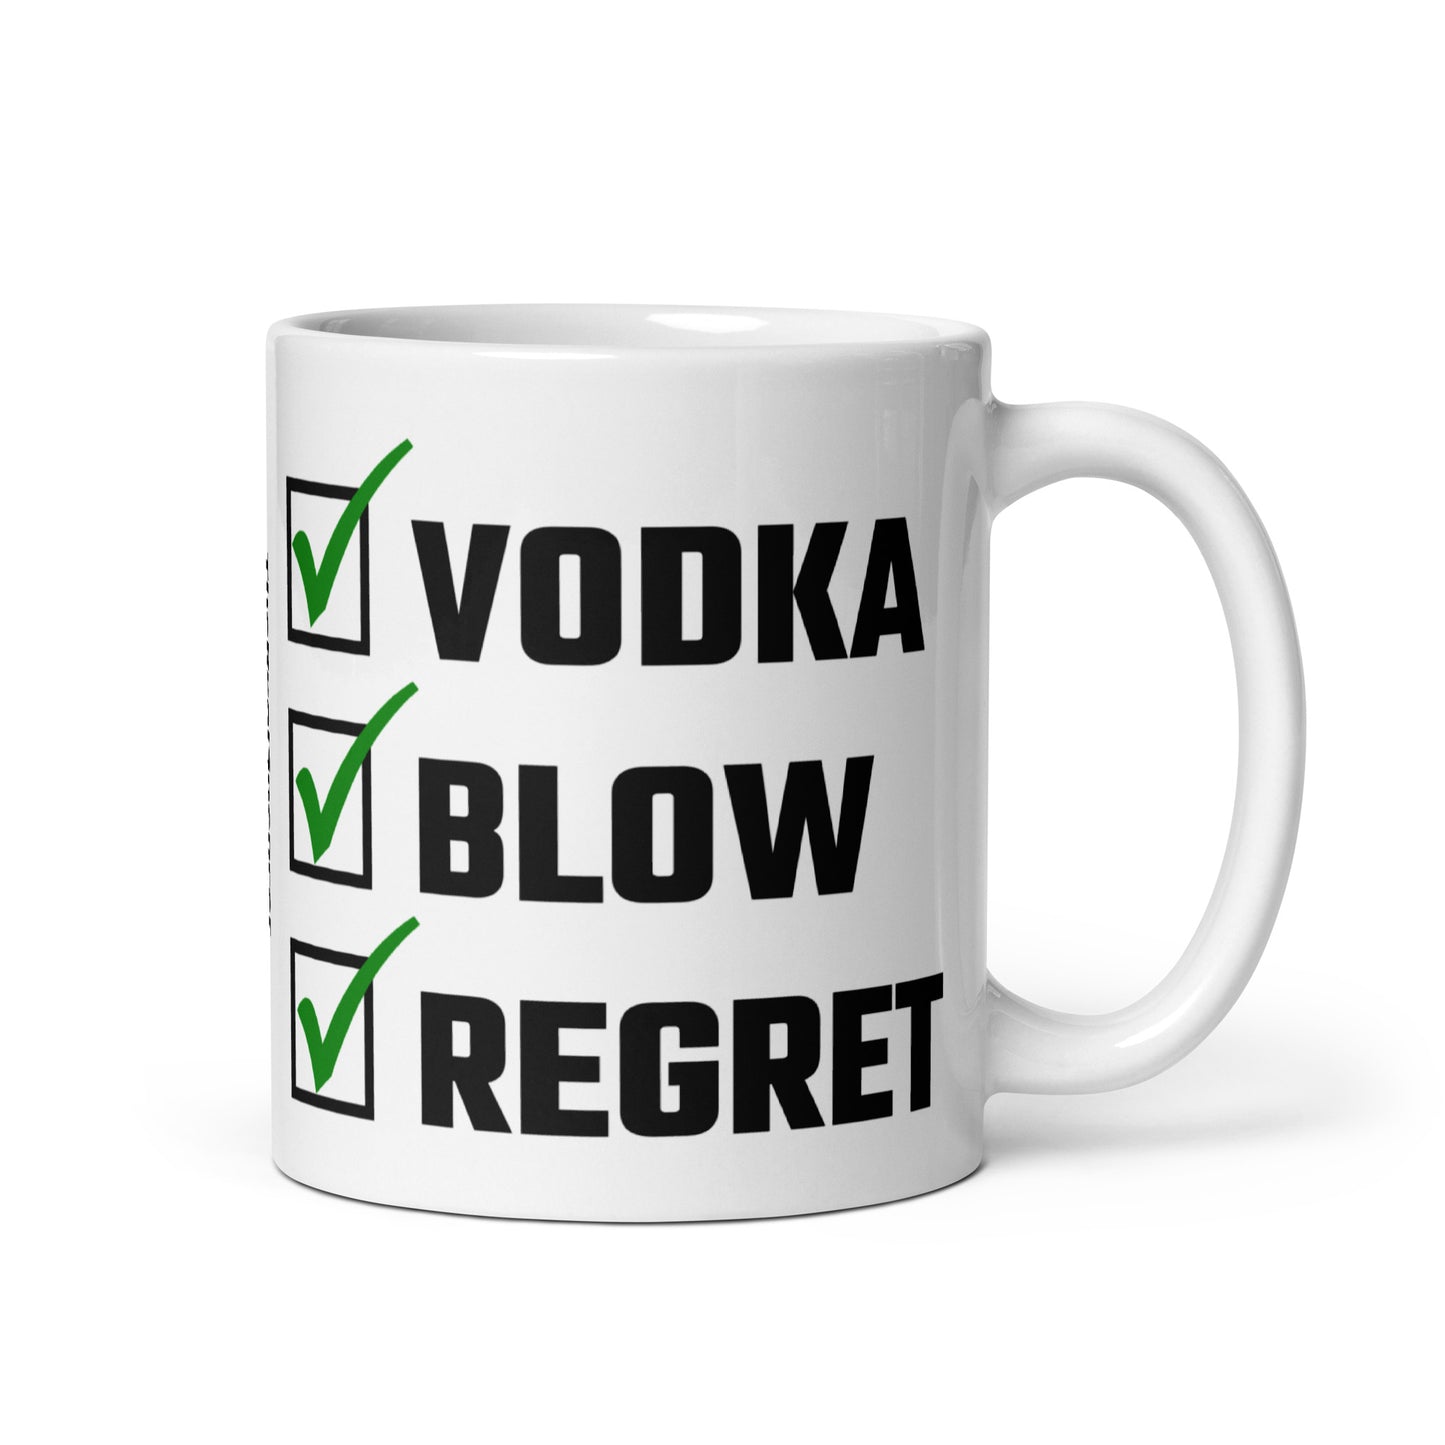 Vodka, Blow, Regret Mug